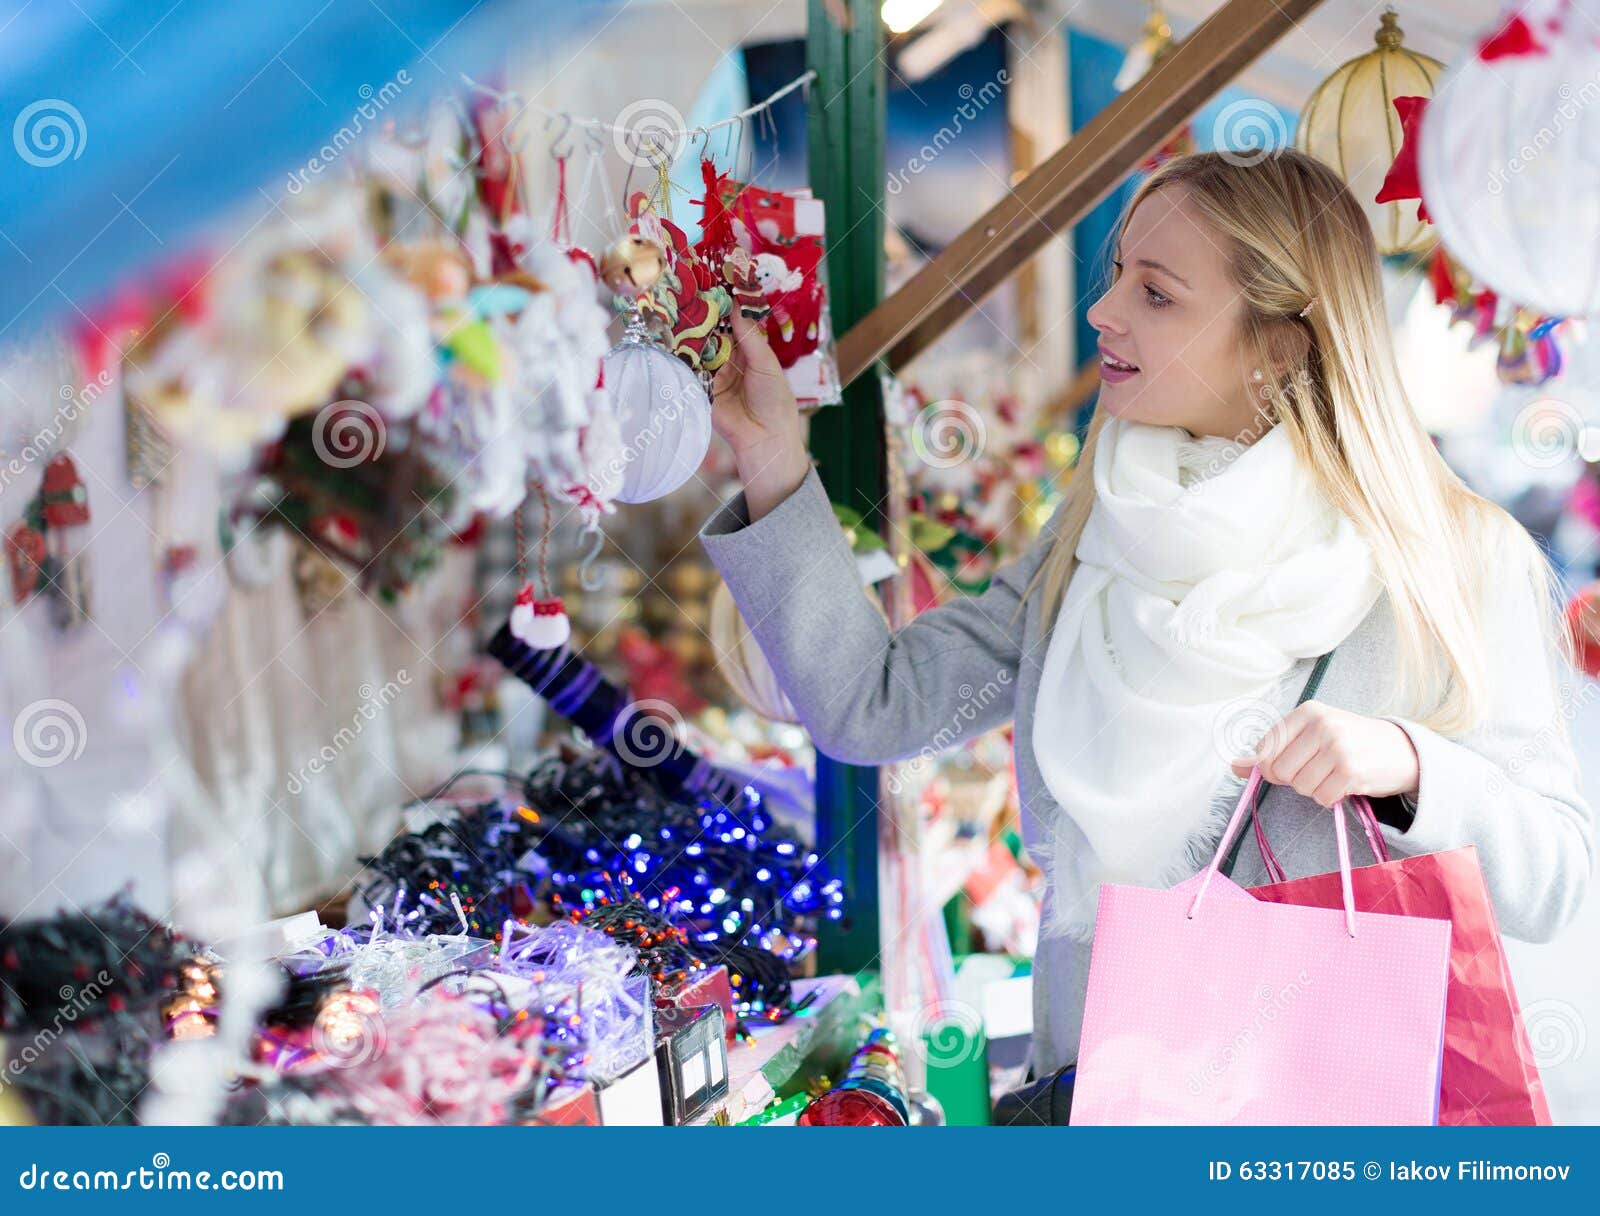 Girl Shopping at Christmas Market Stock Image - Image of european ...